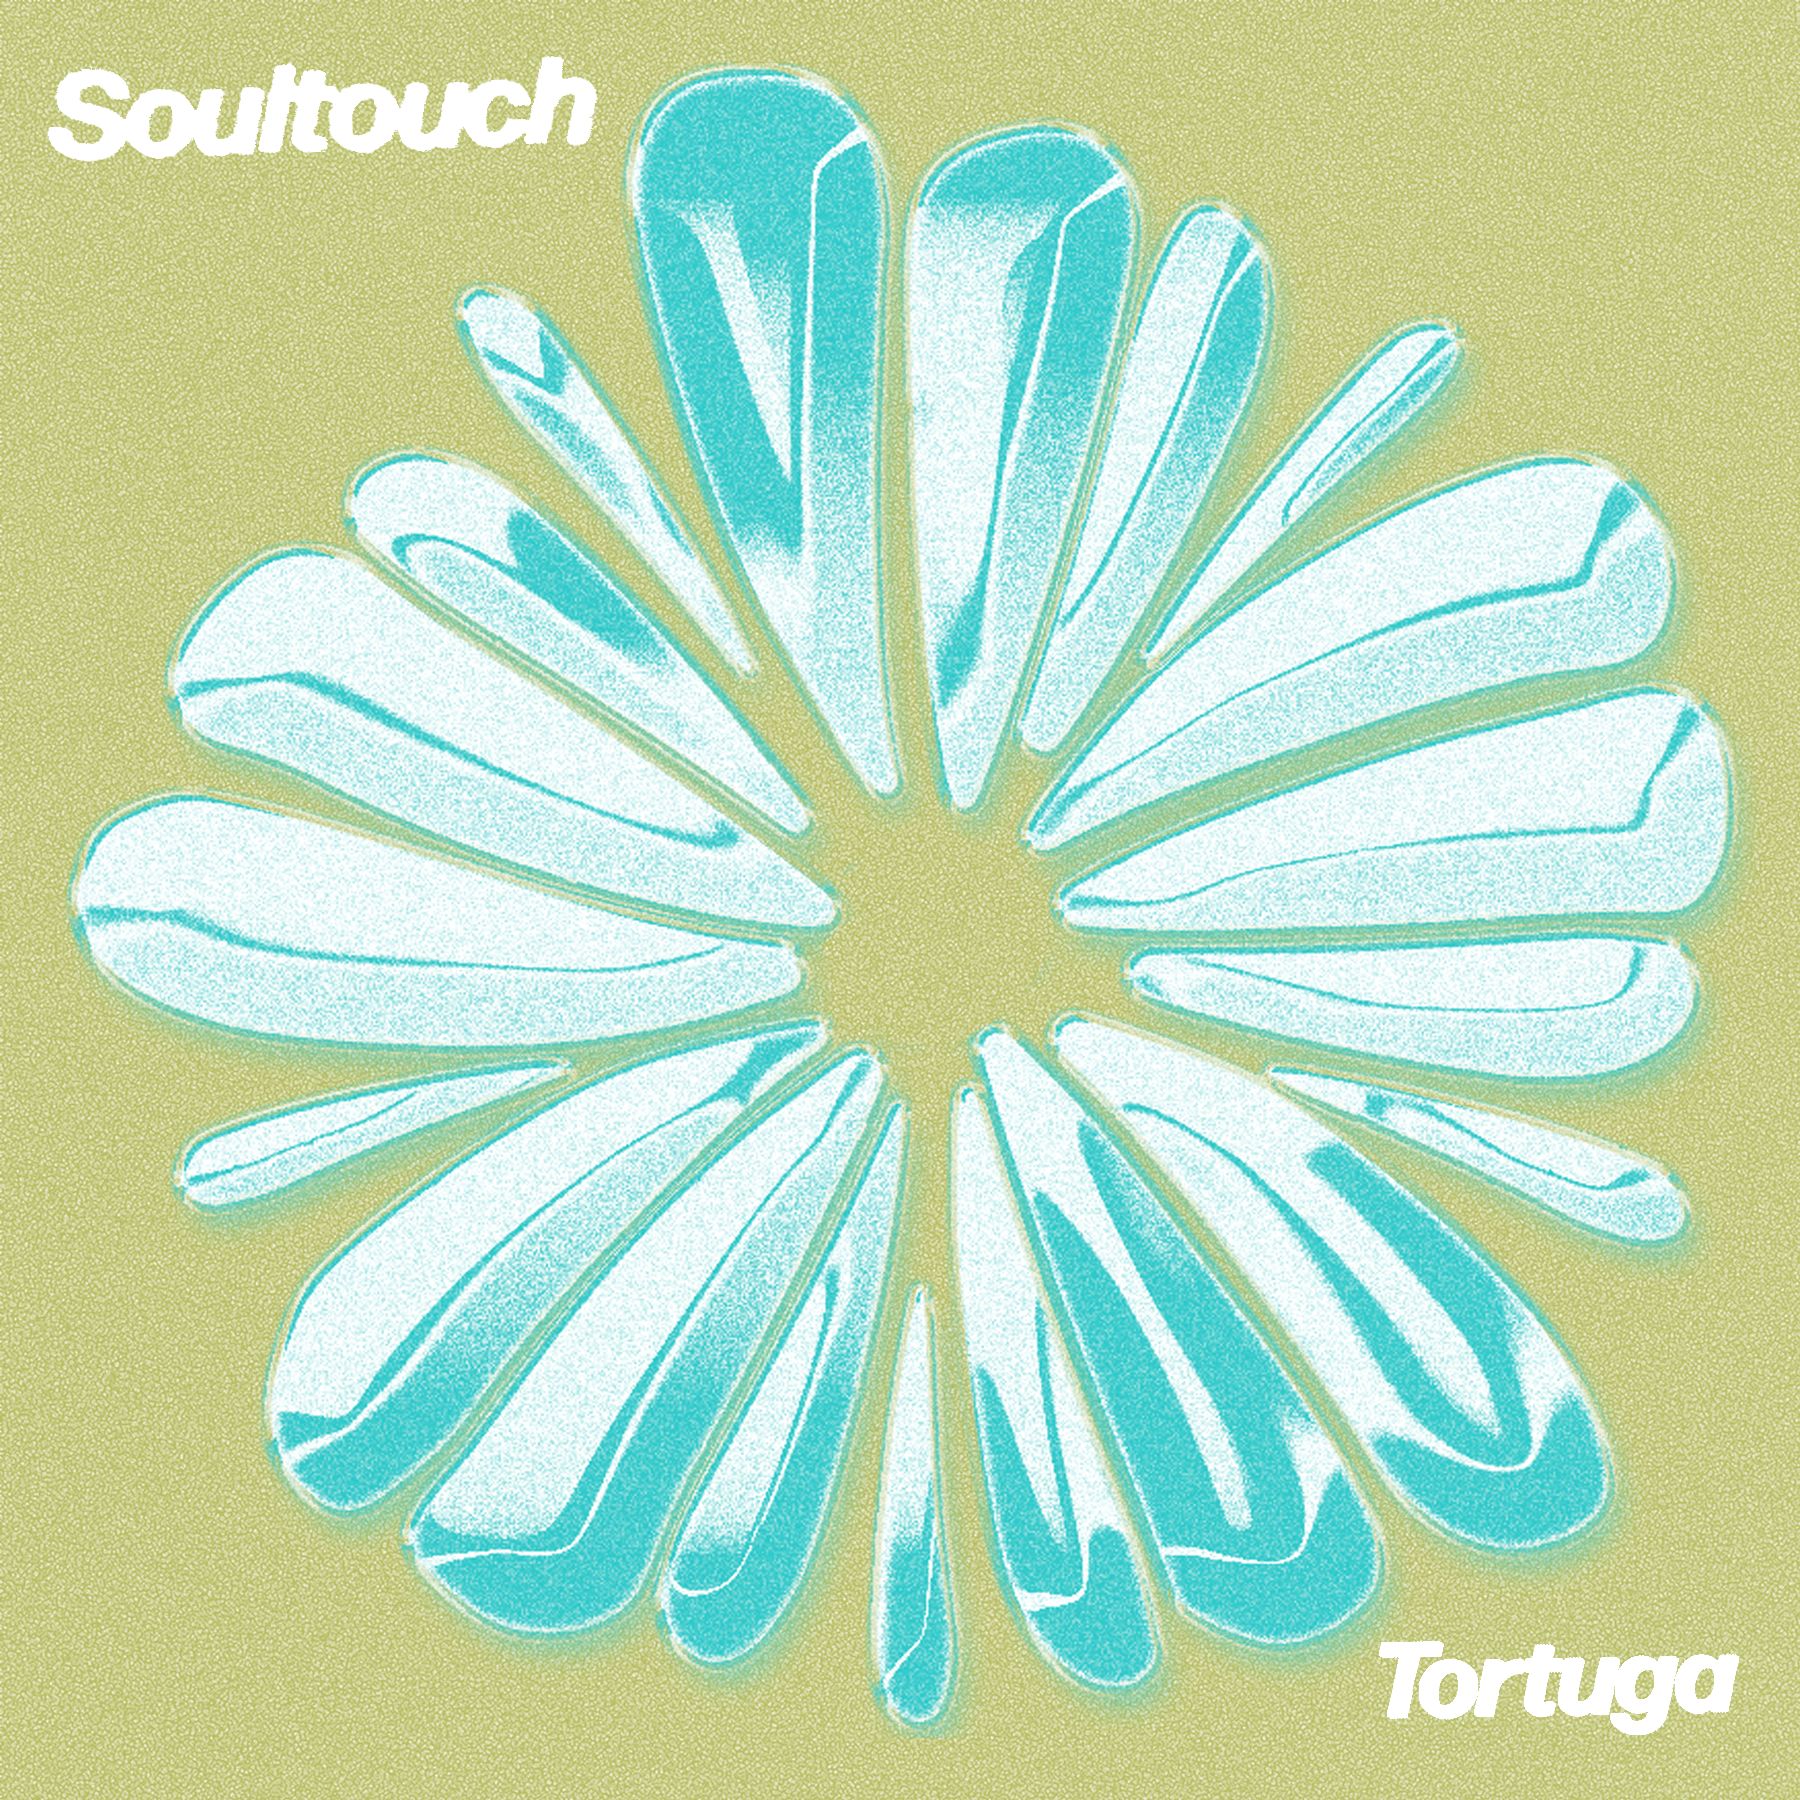 Eroflueden PREMIERE : Tortuga - Soultouch